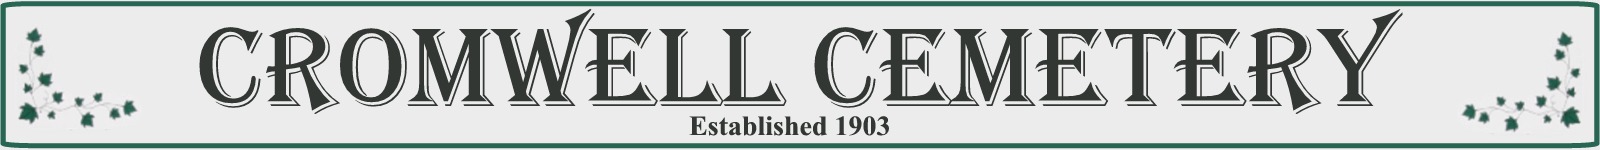 Cromwell Cemetery Association | Gig Harbor, Washington